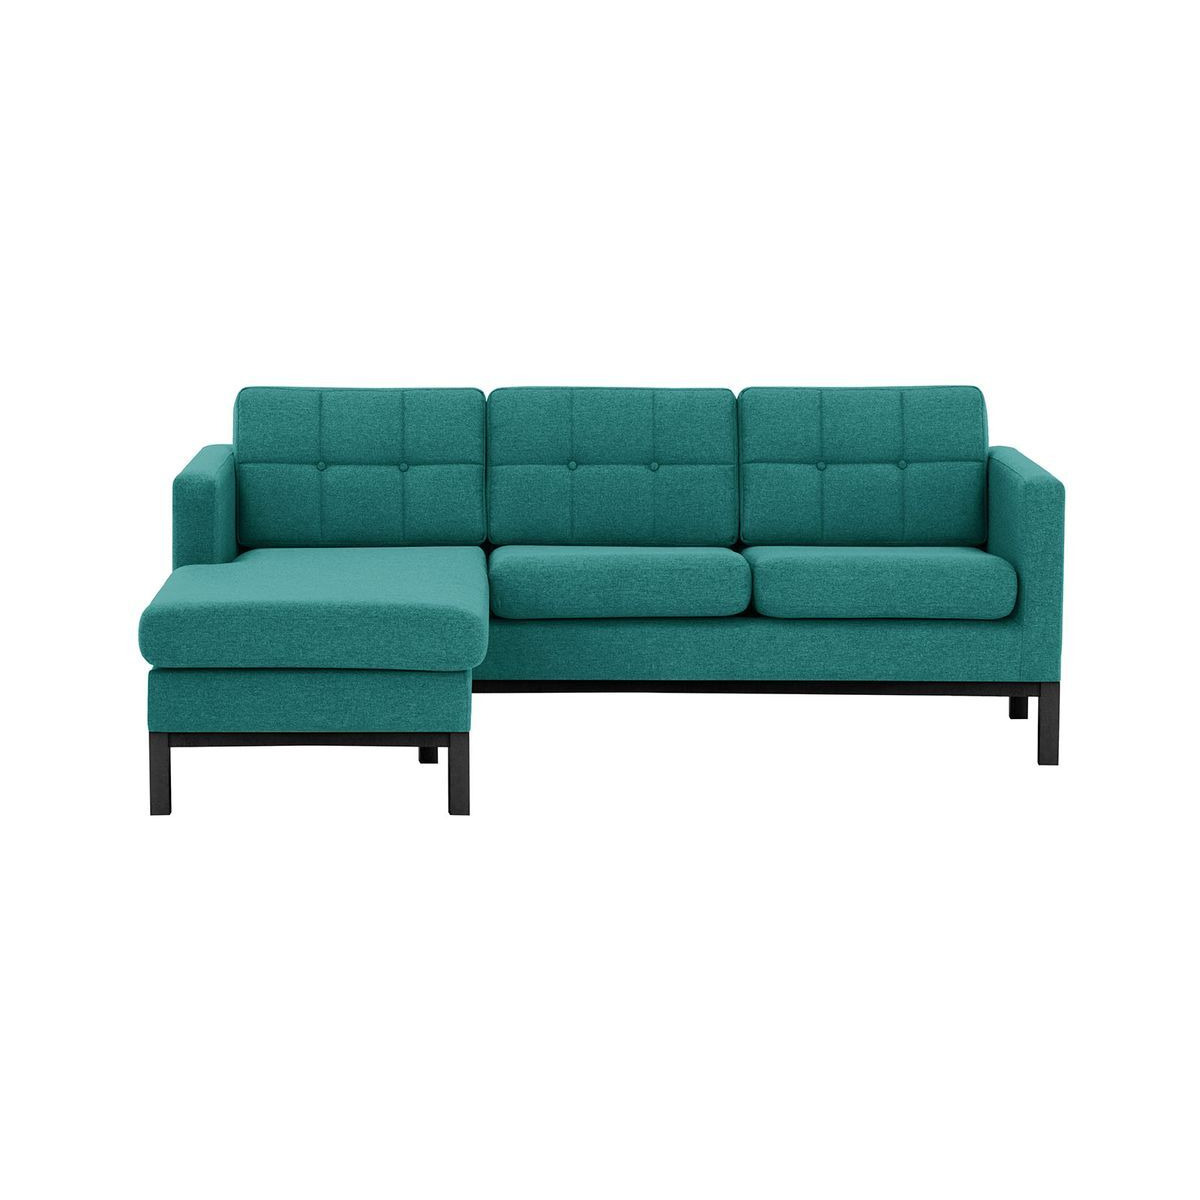 Normann Left Hand Corner Sofa, turquoise, Leg colour: black - image 1